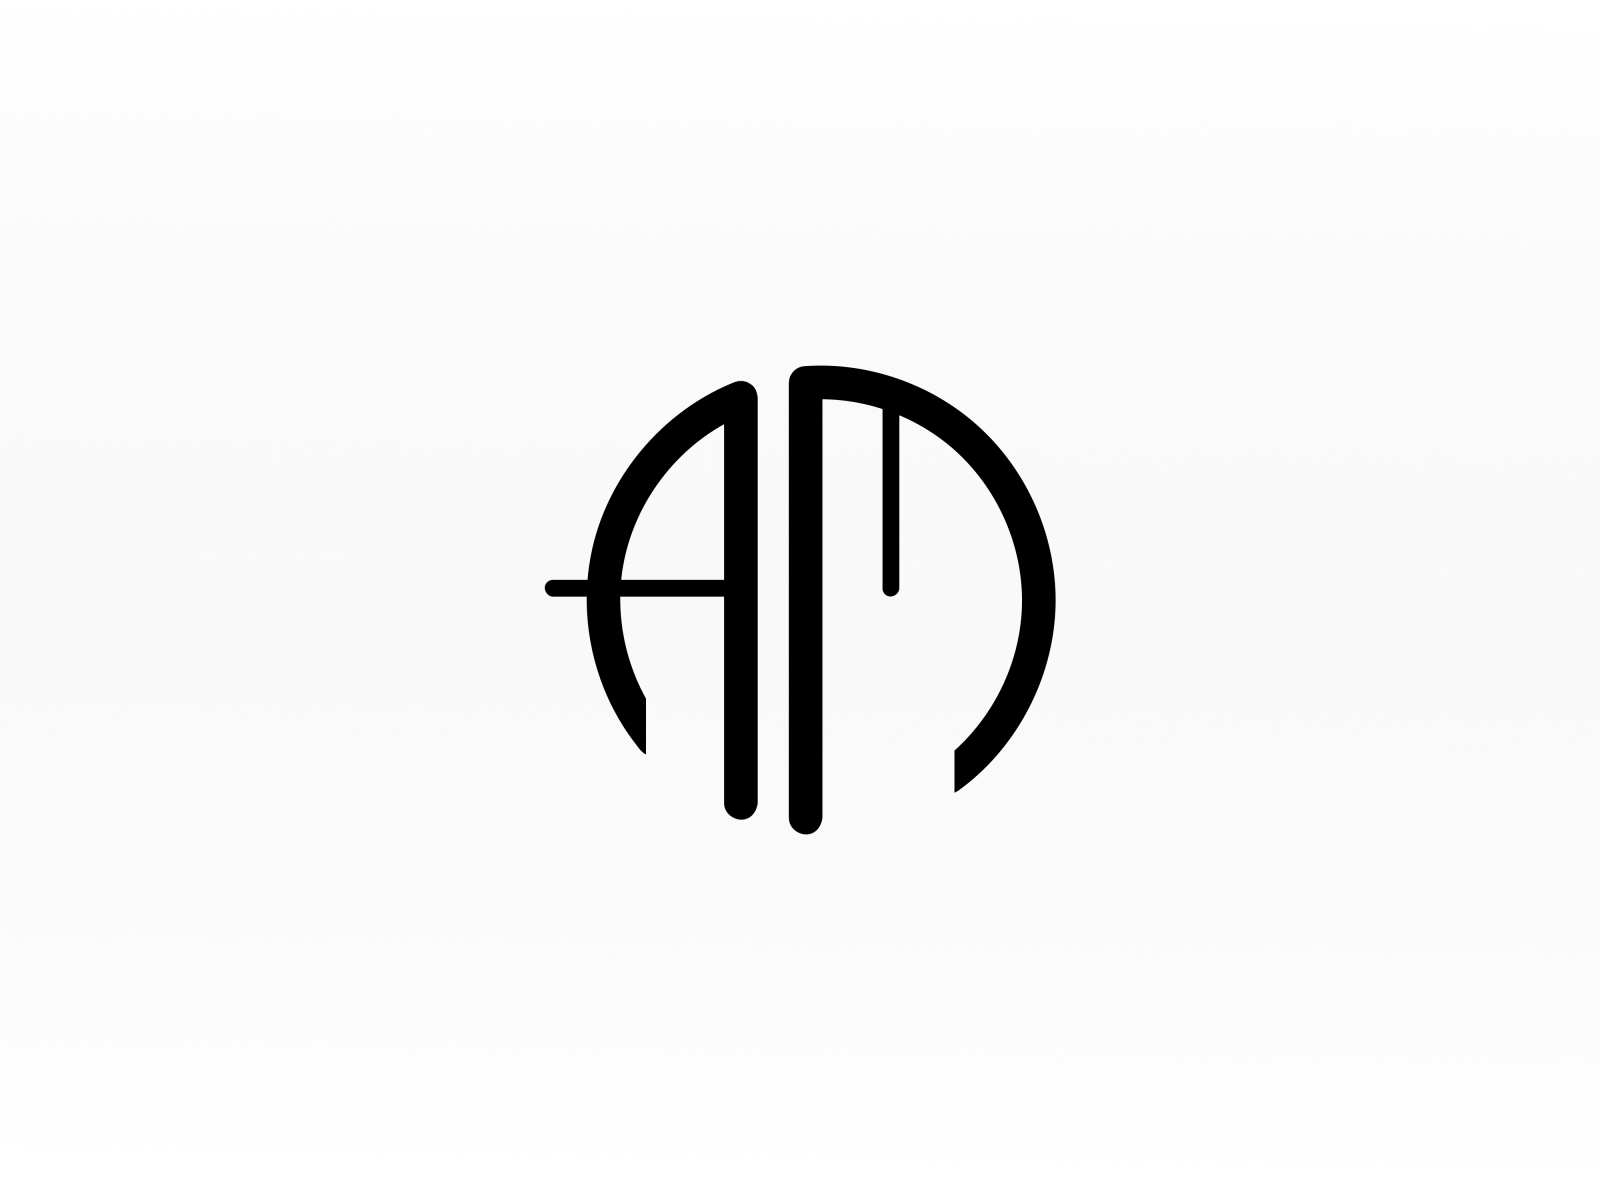 Logo for AM Design by Yuriy Anufriev on Dribbble